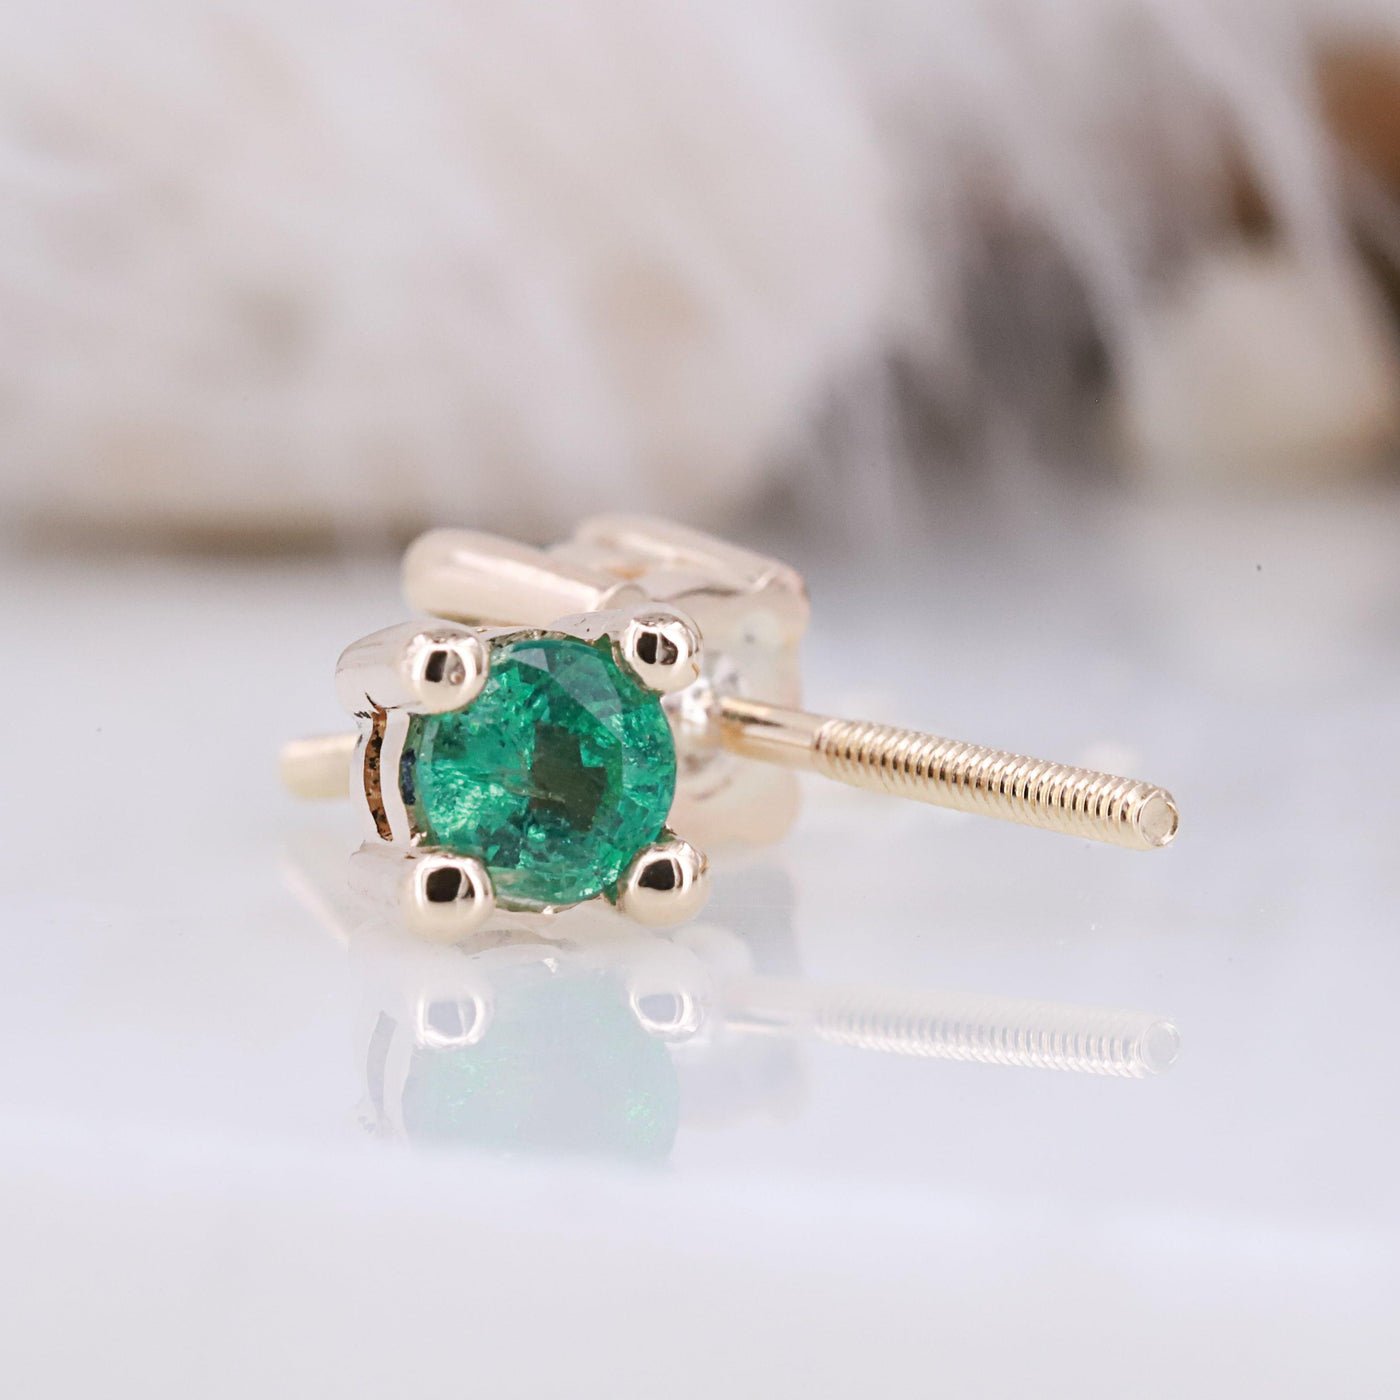 Emerald color earrings emerald earrings gold hoop earrings stud earrings